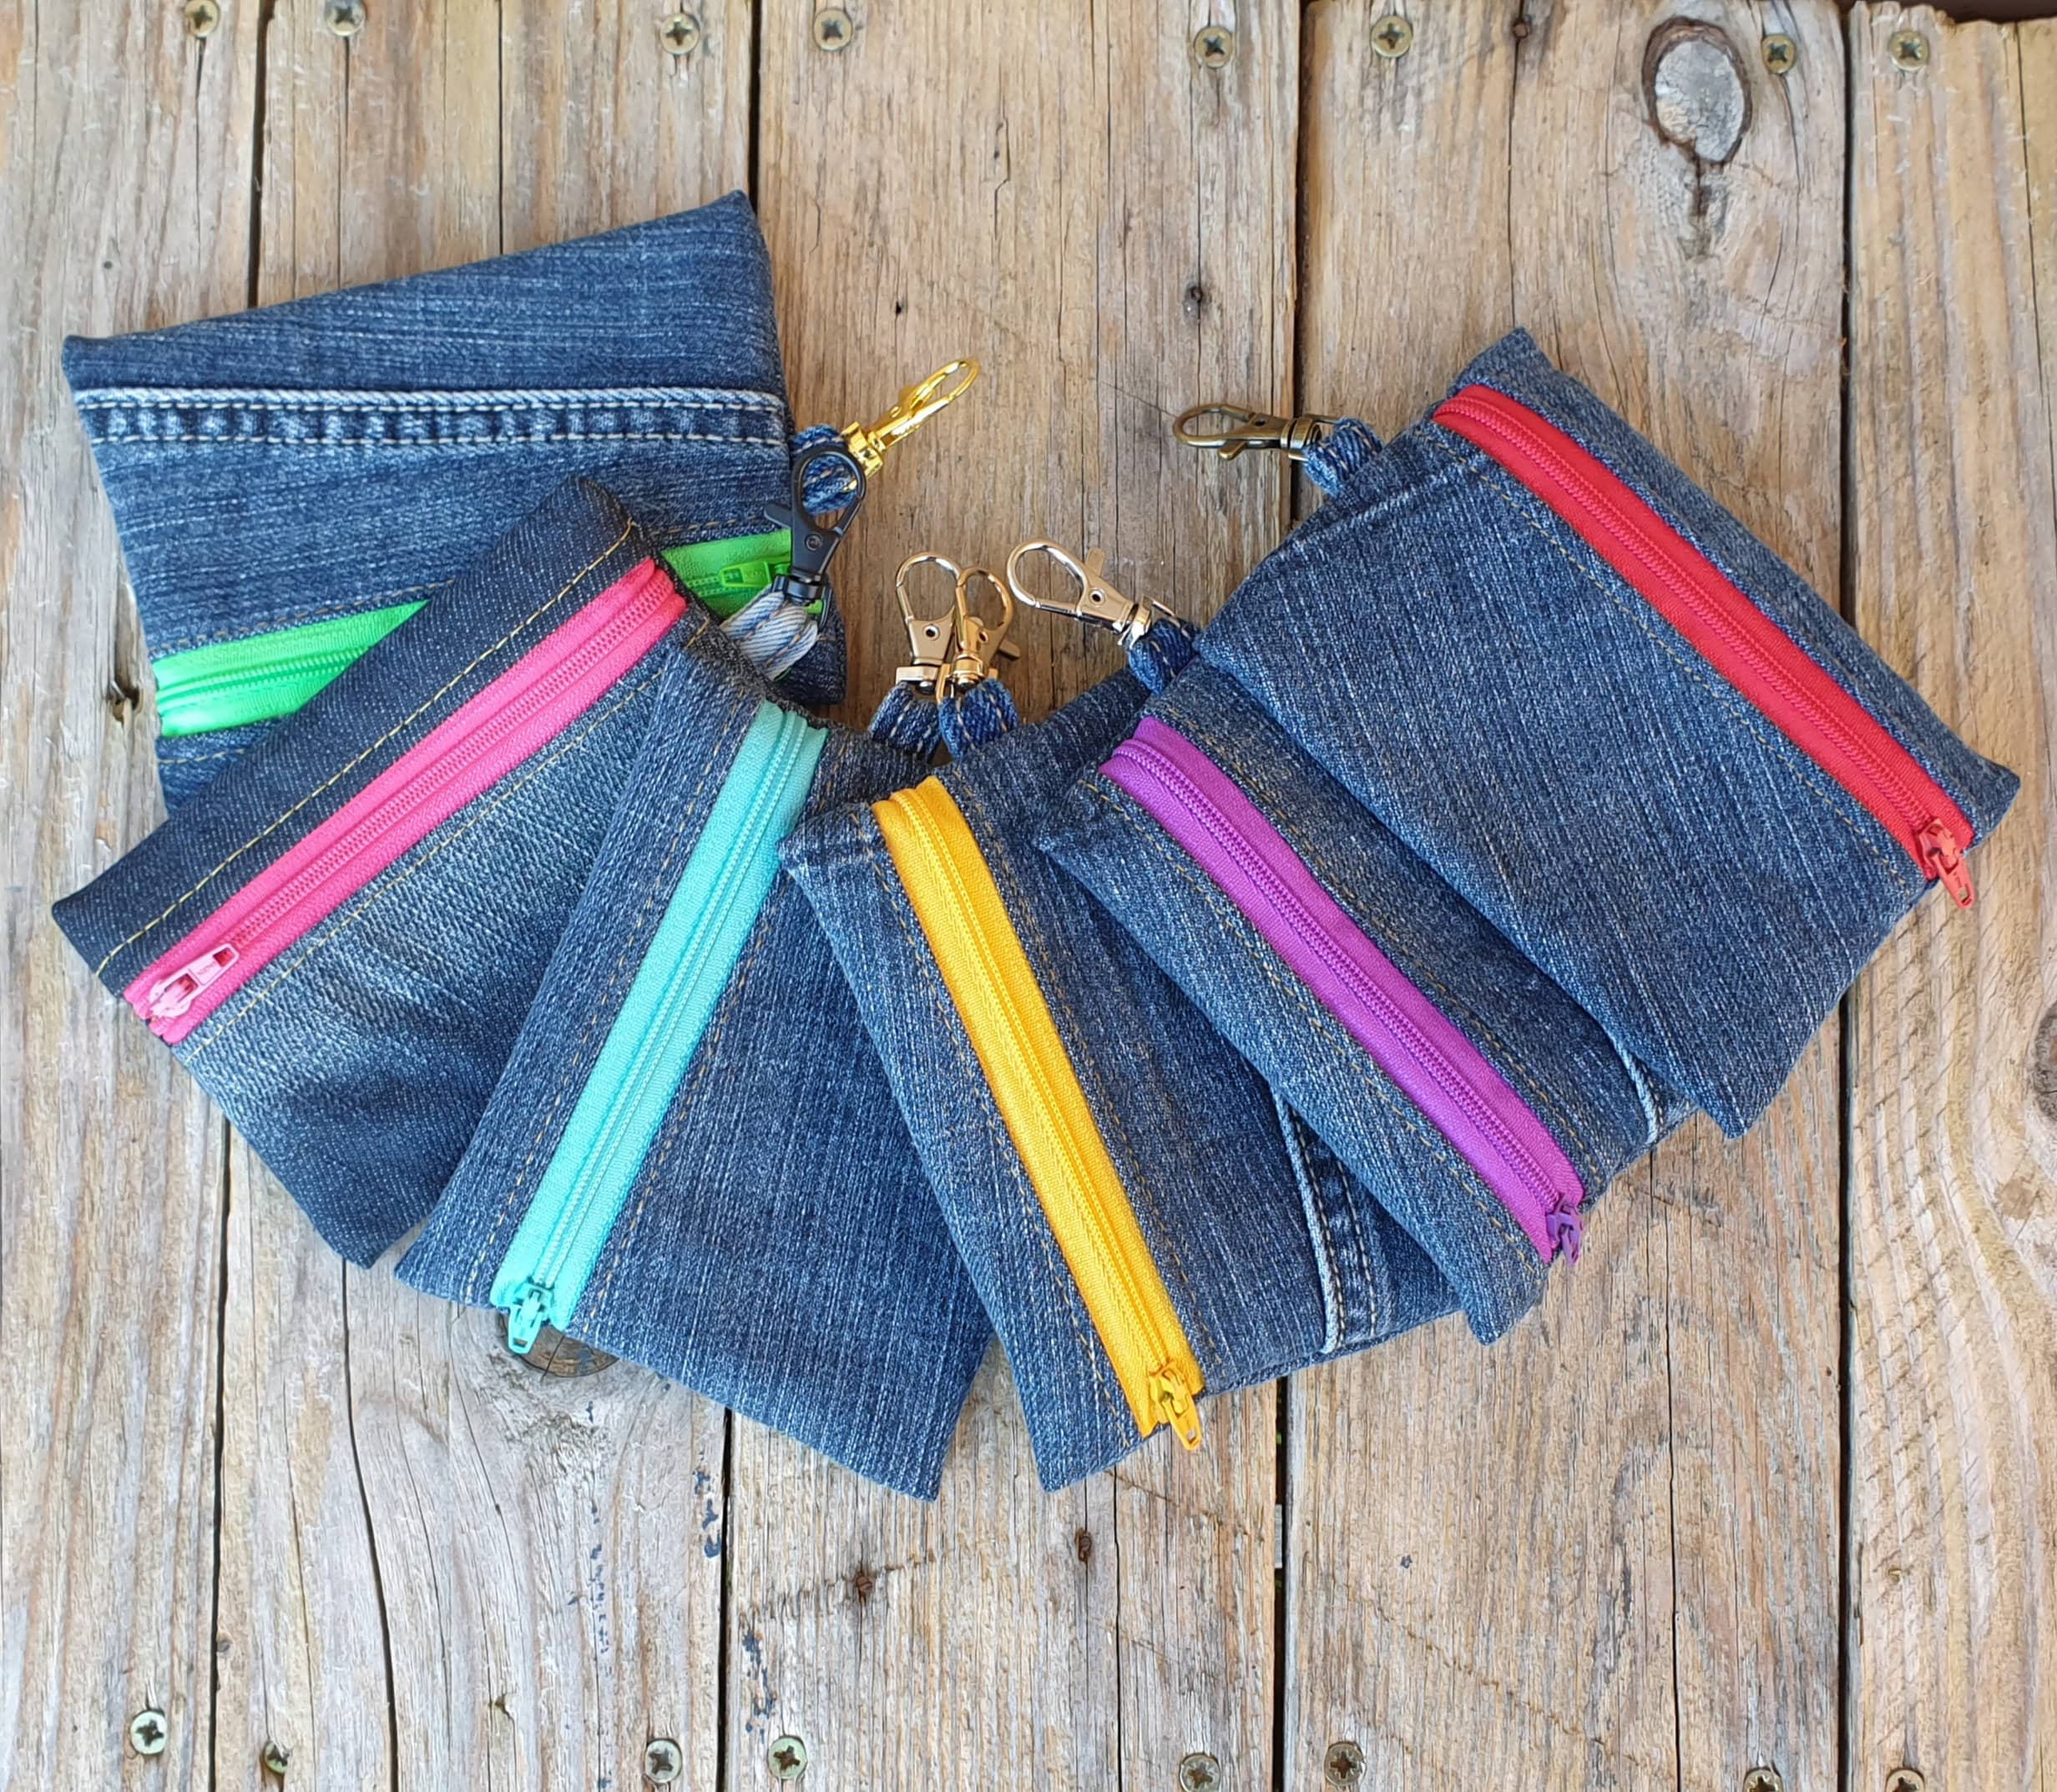 3 ideas denim purse bag tutorial from scrap old jeans , denim reuse ideas ,  small purse bag tutorial - YouTube